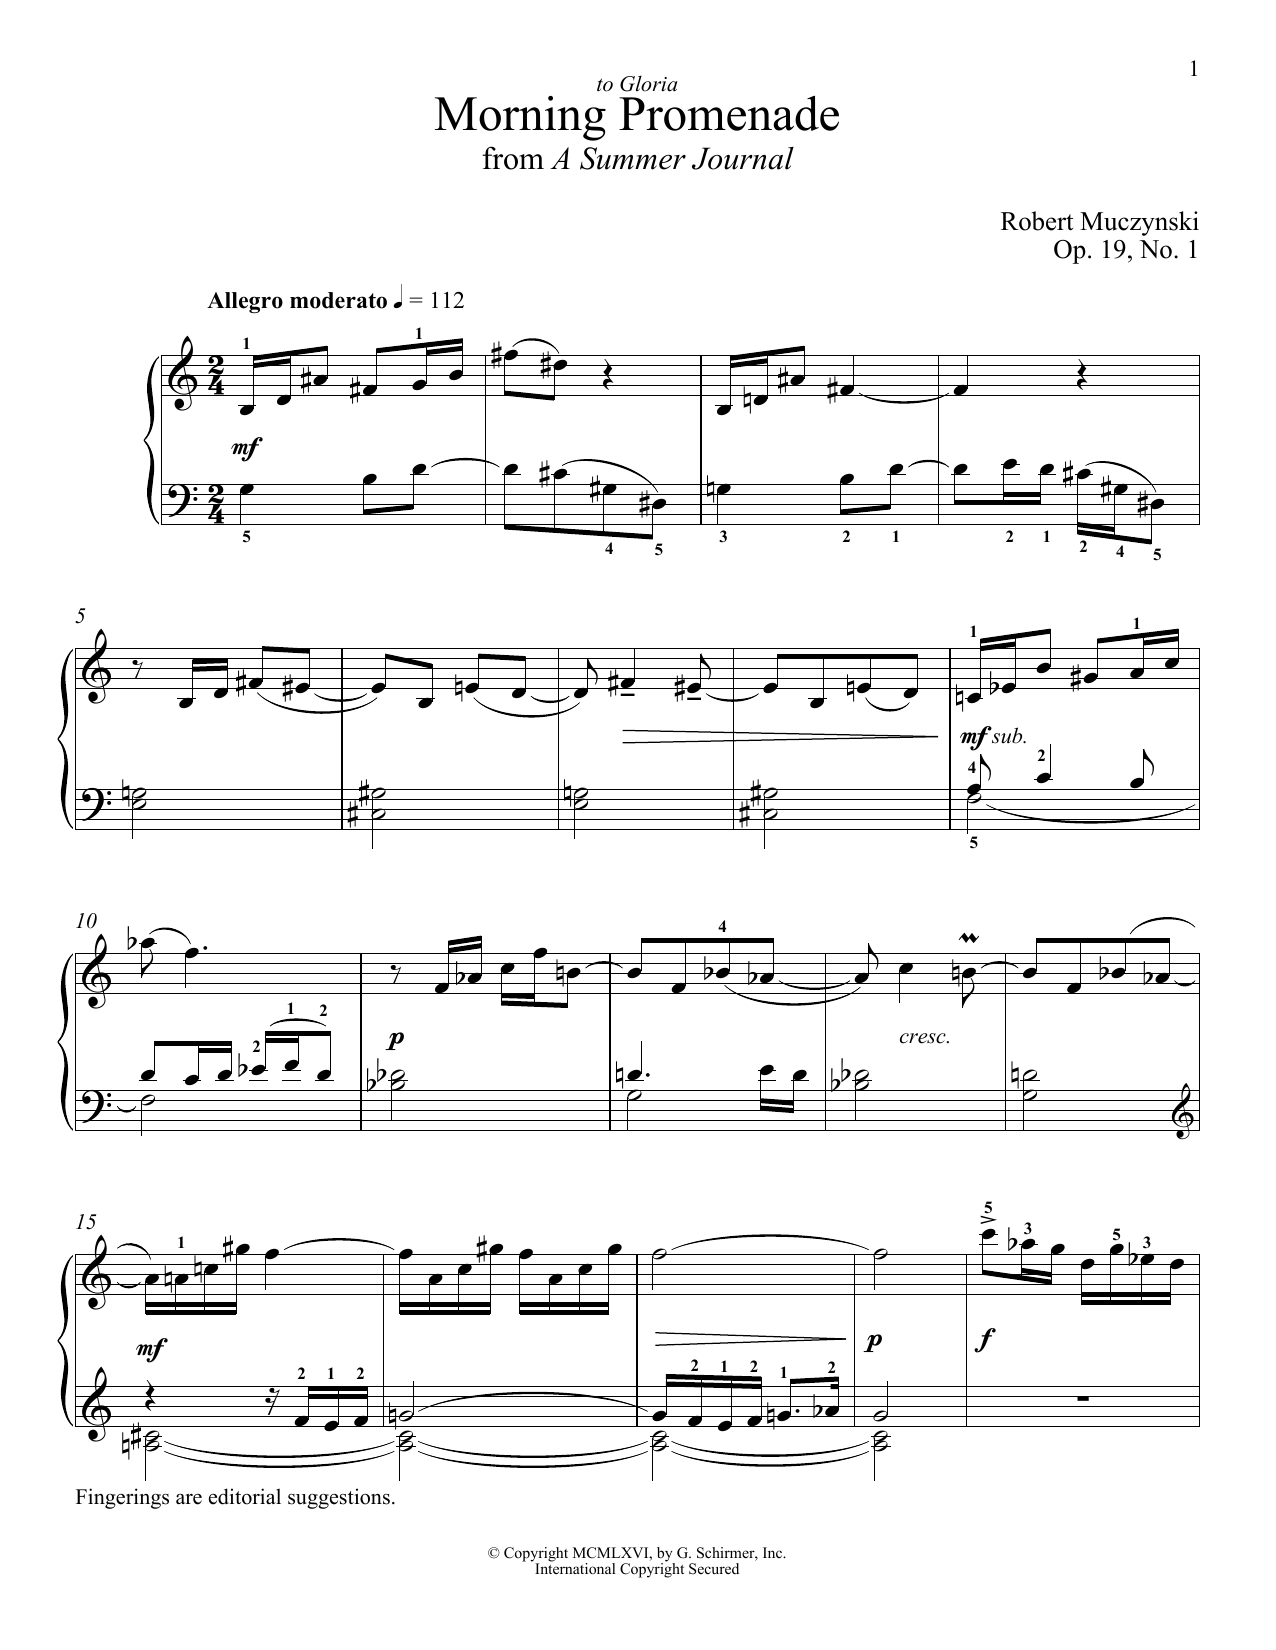 Robert Muczynski Morning Promenade Sheet Music Notes & Chords for Piano - Download or Print PDF